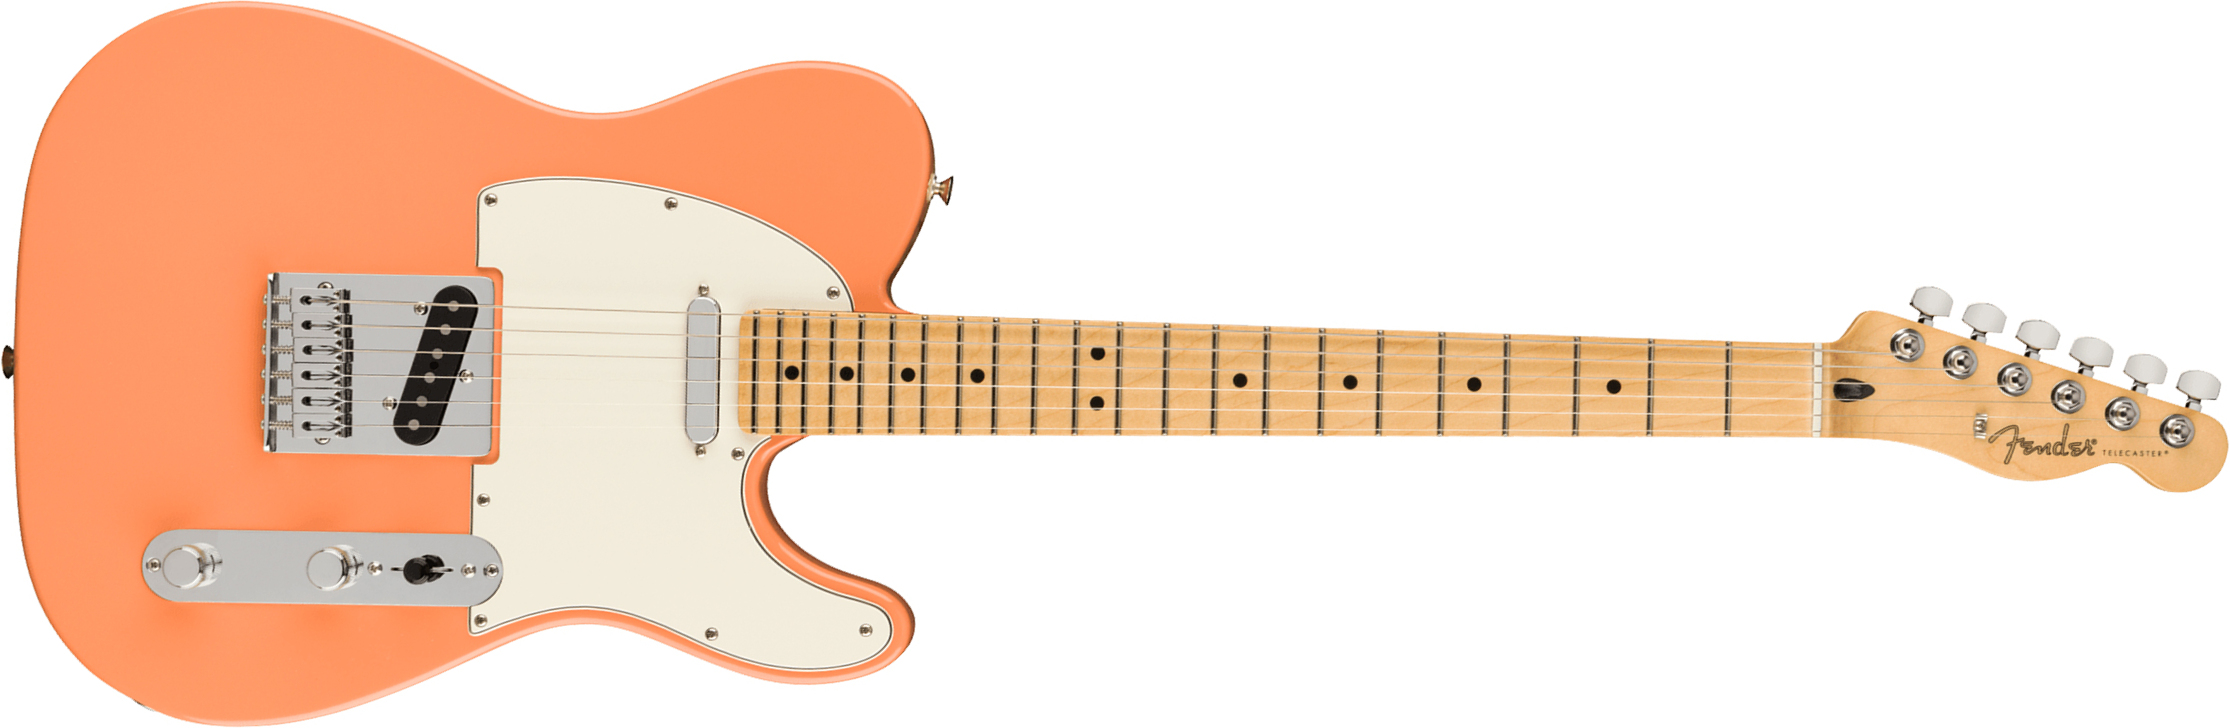 Fender Tele Player Ltd Mex 2s Ht Mn - Pacific Peach - Televorm elektrische gitaar - Main picture